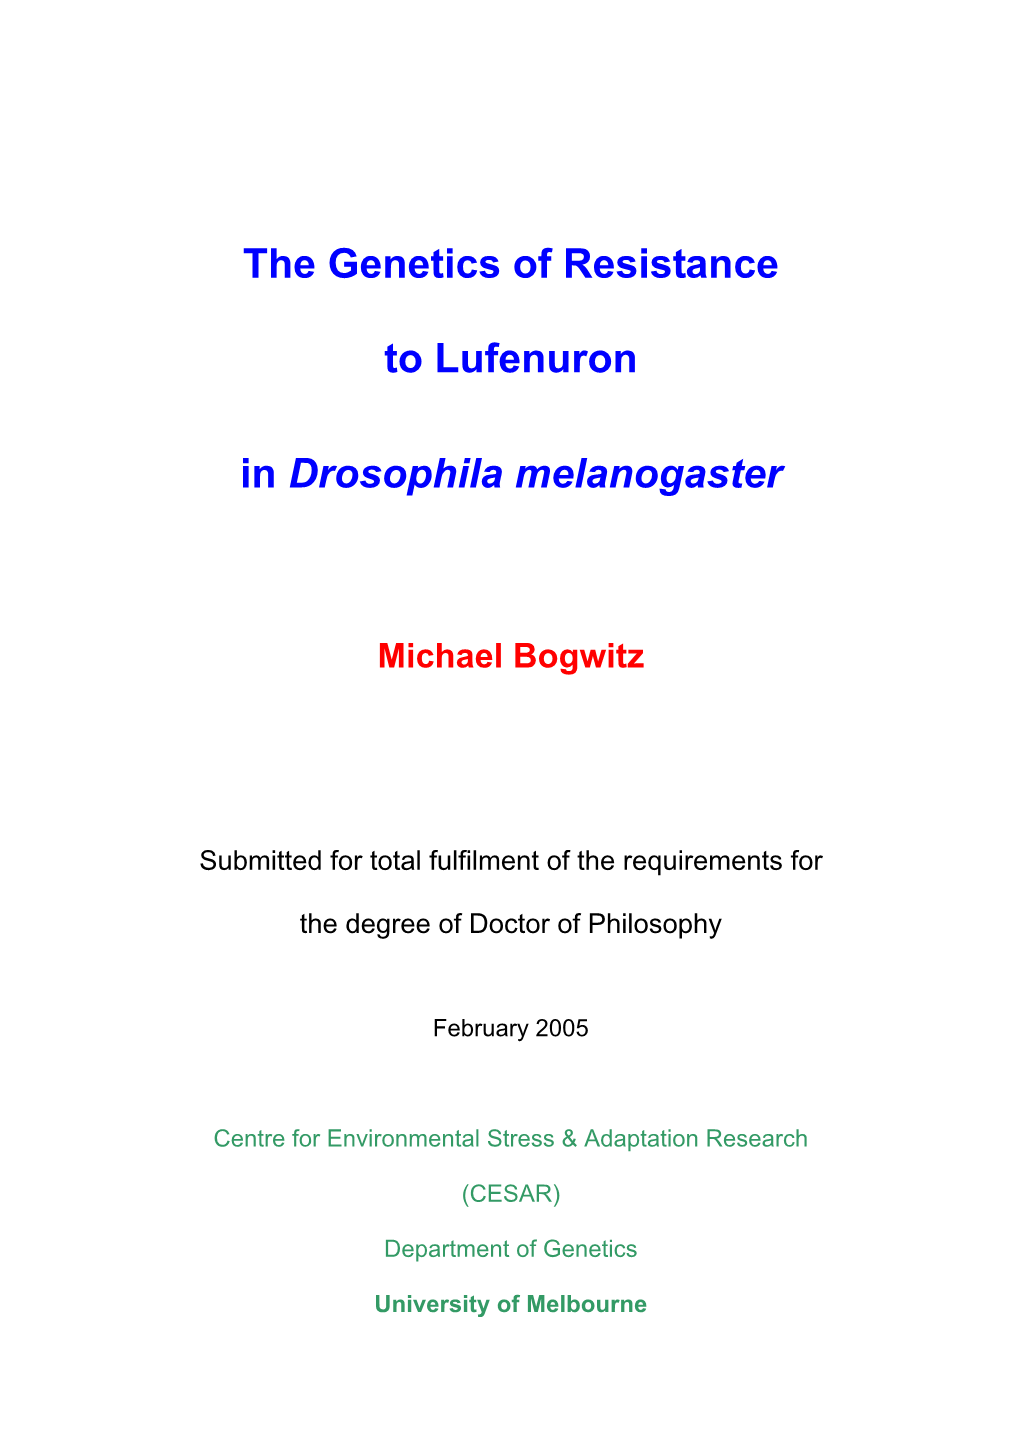 The Genetics of Resistance to Lufenuron in Drosophila Melanogaster